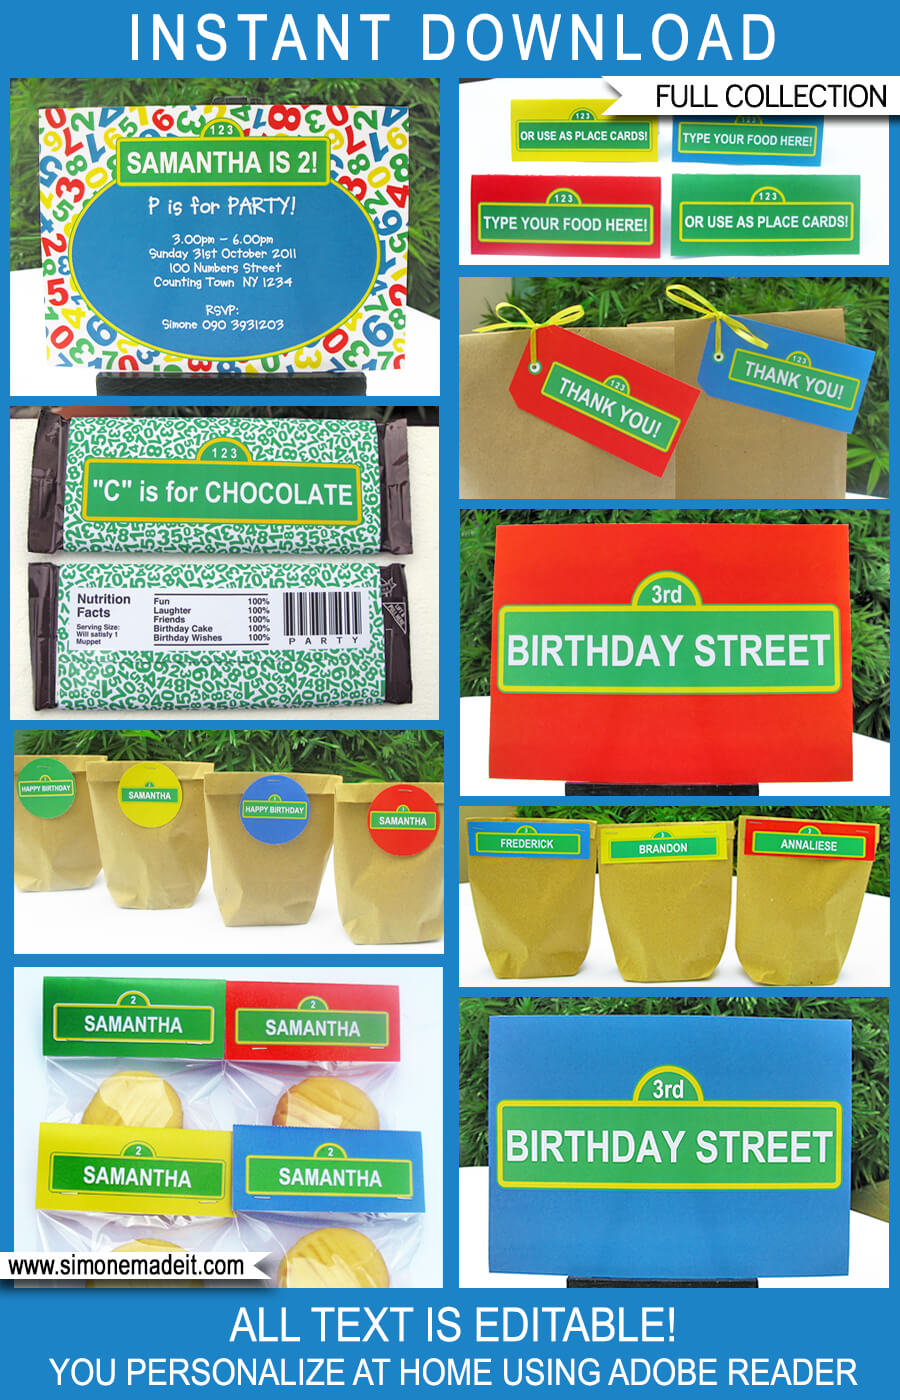 Sesame Street Party Printables, Invitations & Decorations | Editable Birthday Party Theme Templates | INSTANT DOWNLOAD $12.50 via SIMONEmadeit.com